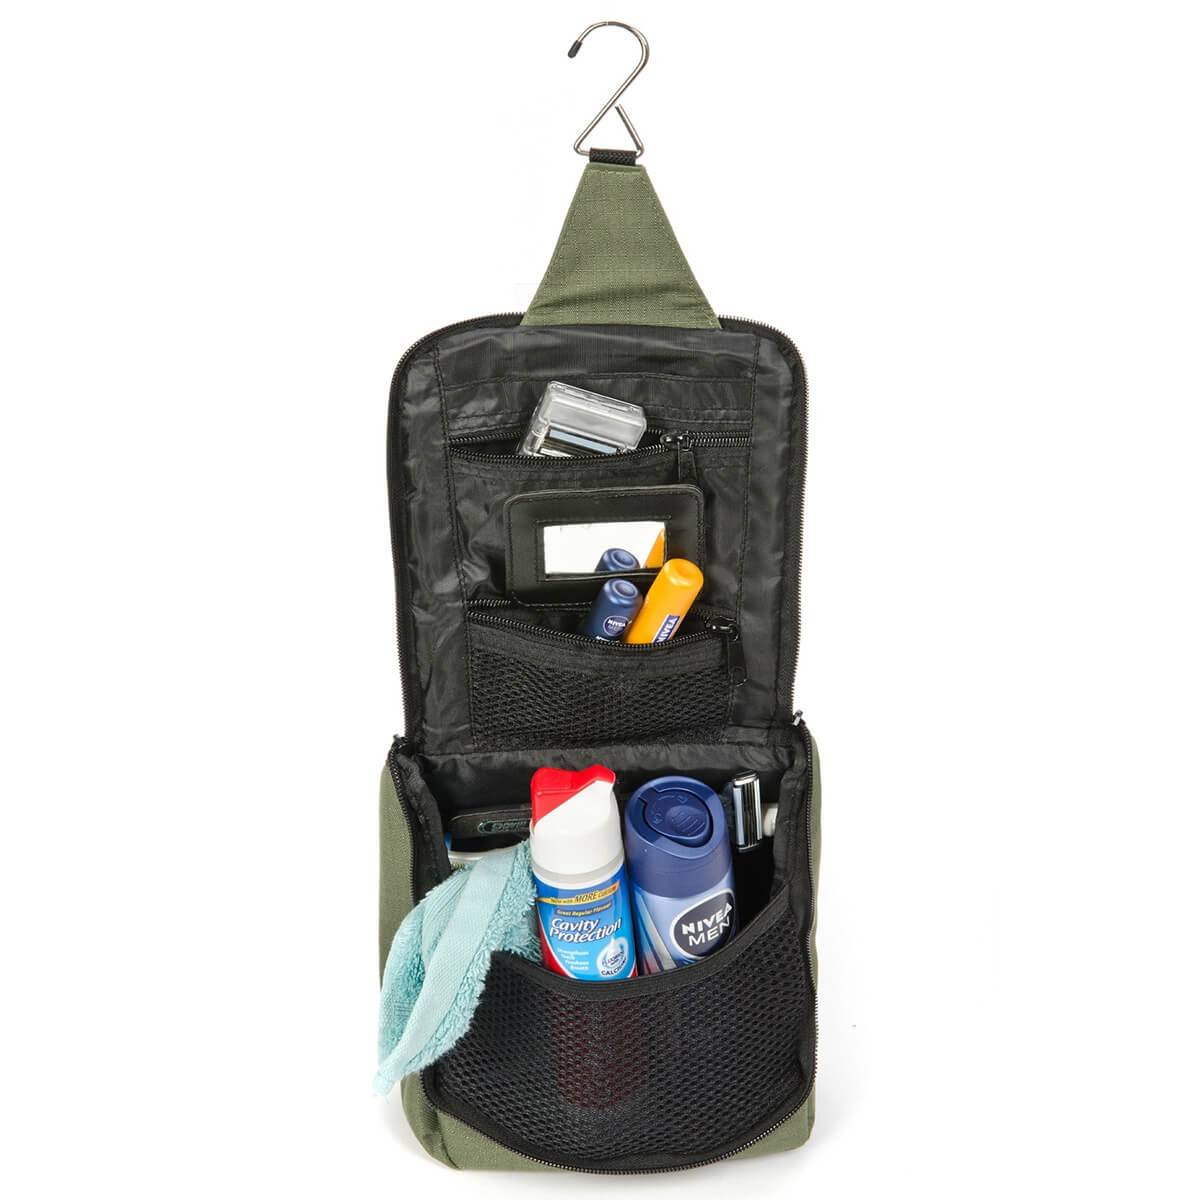 Snugpak Essential Travel Wash Bag - John Bull Clothing